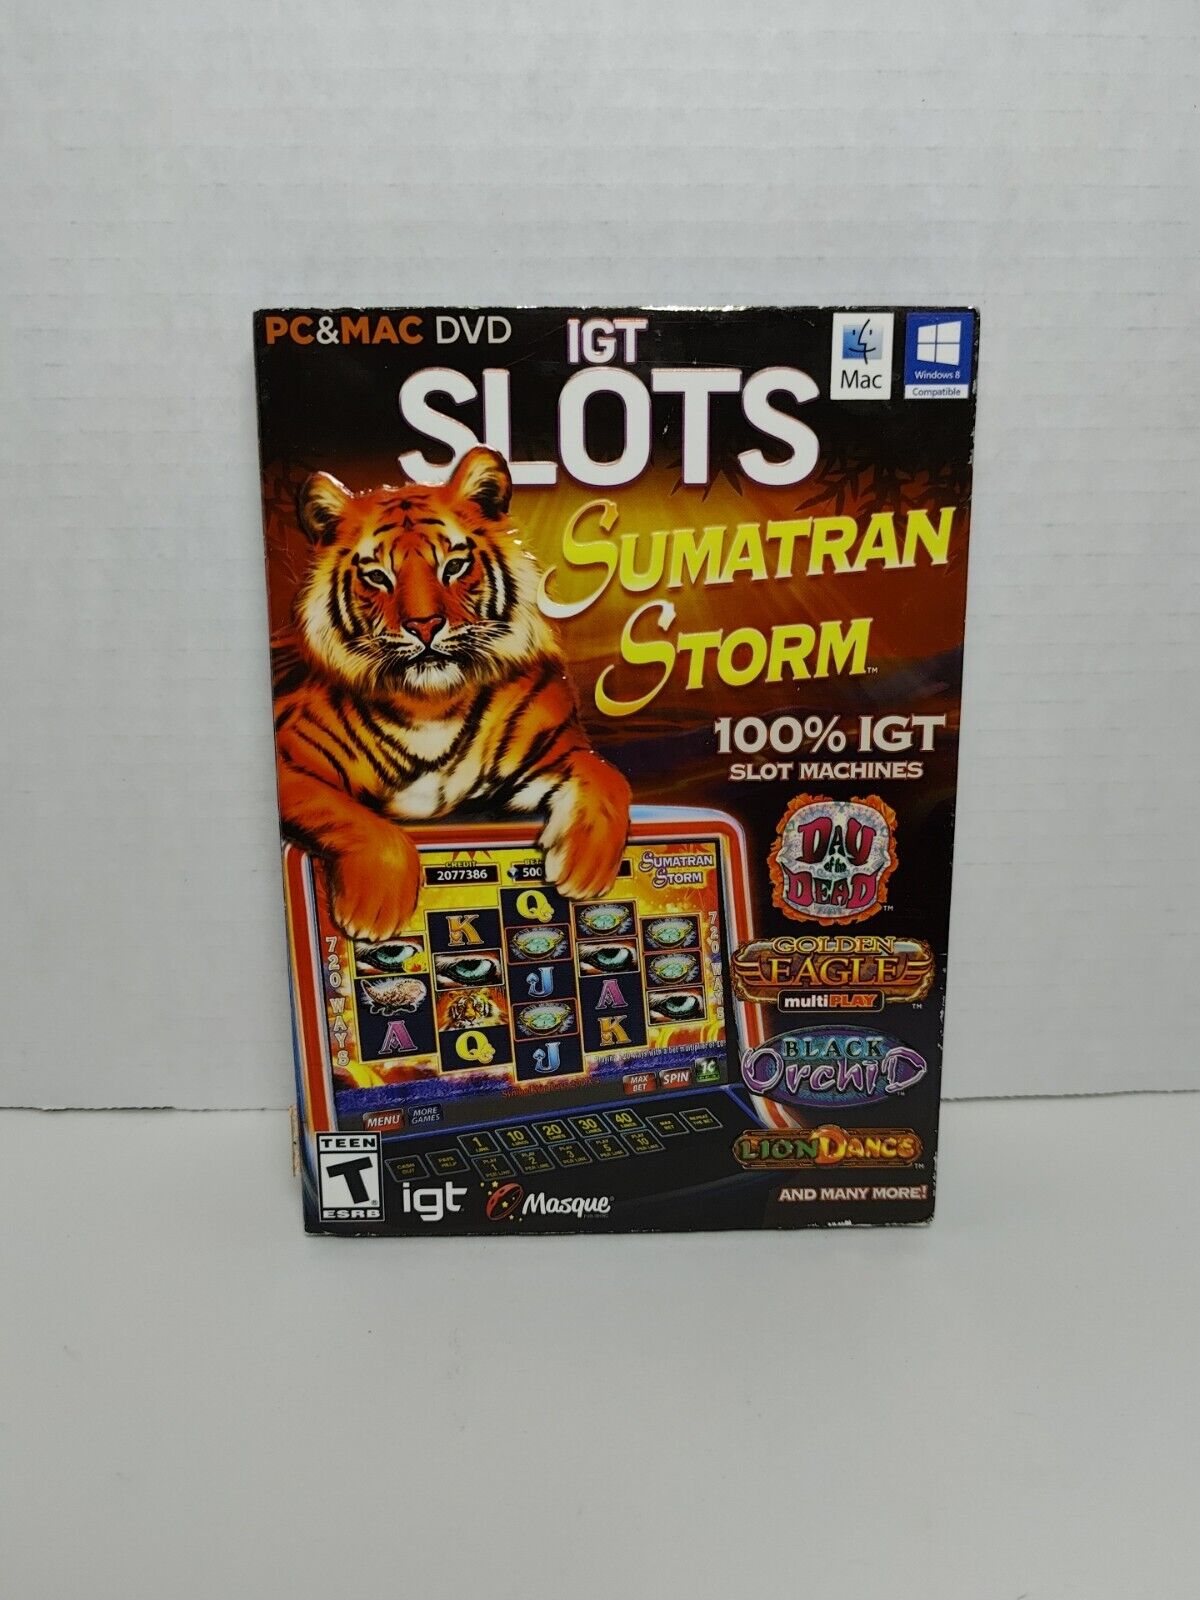 IGT Slots Sumatran Storm (PC & MAC DVD-ROM, 2014) 100% IGT Slot Machines - VGC